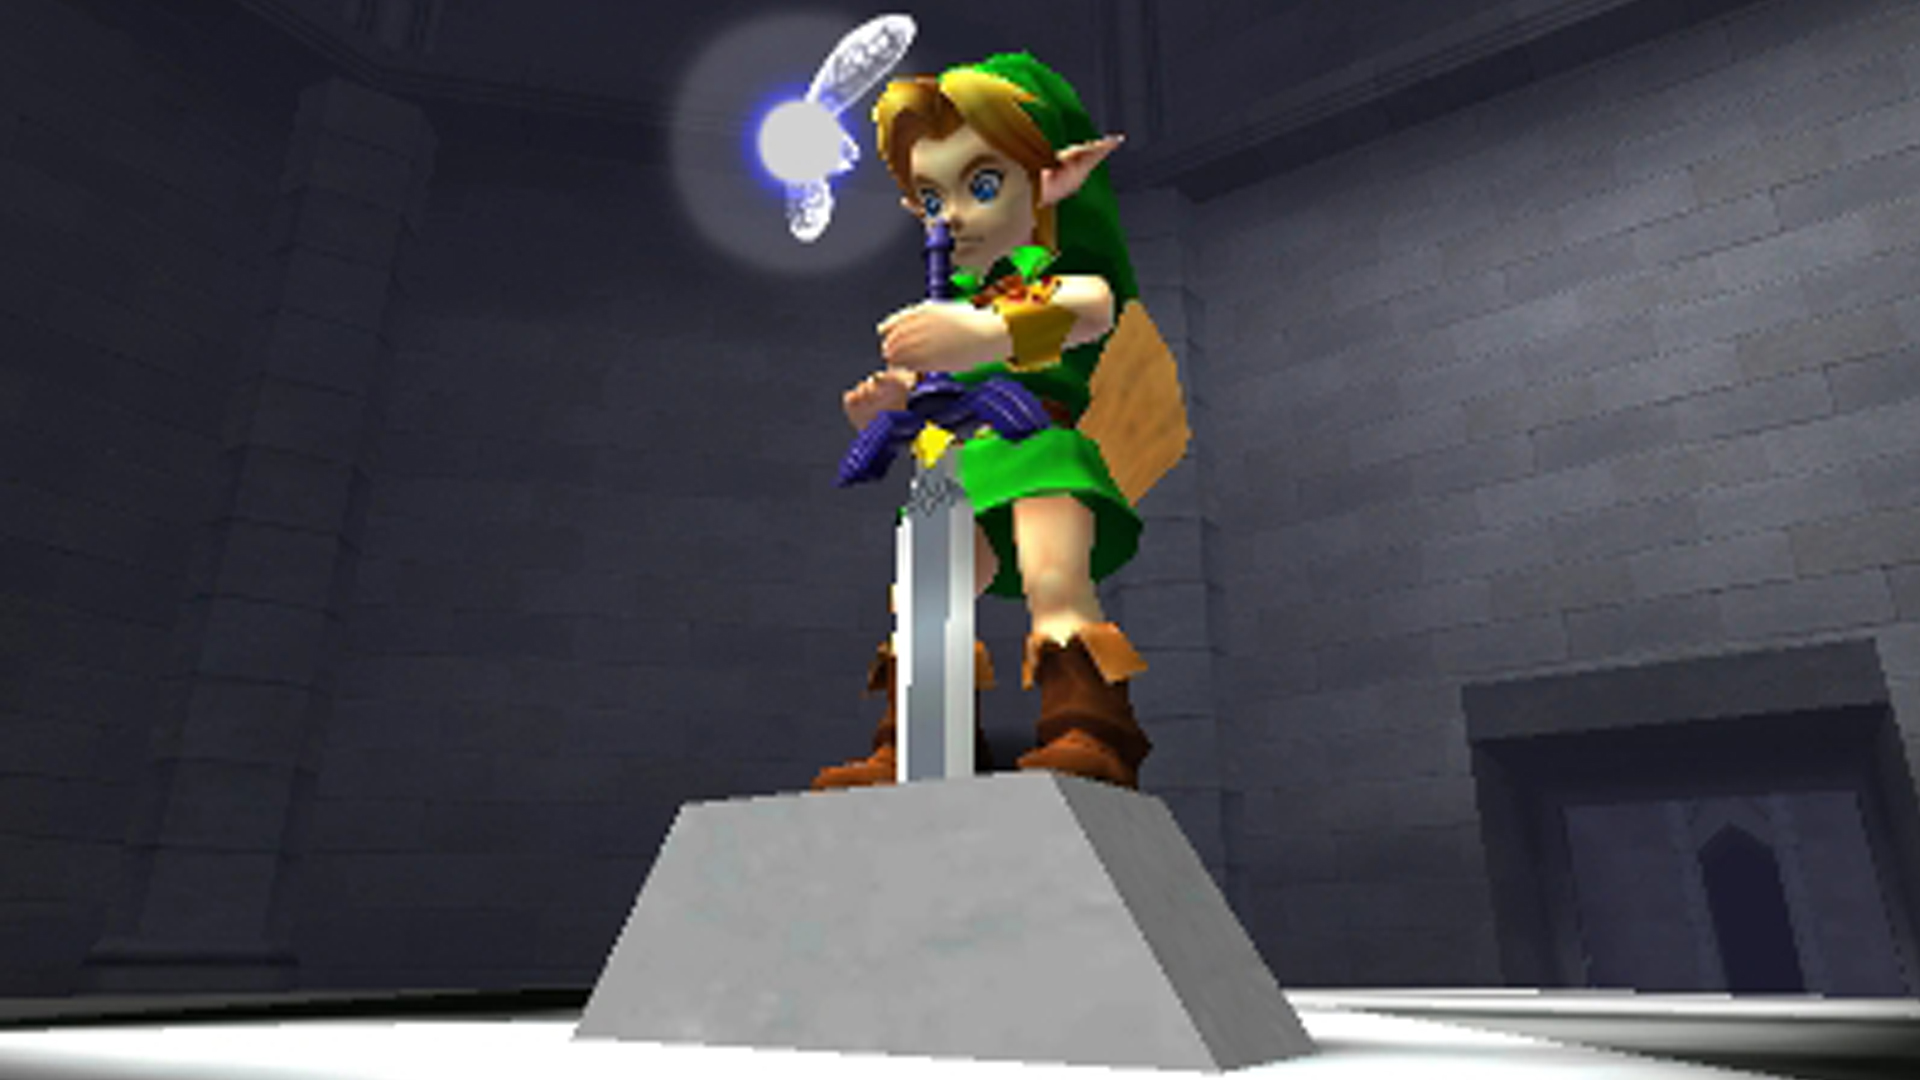 The Legend of Zelda Ocarina of Time Unreal Engine 5 fan remake is